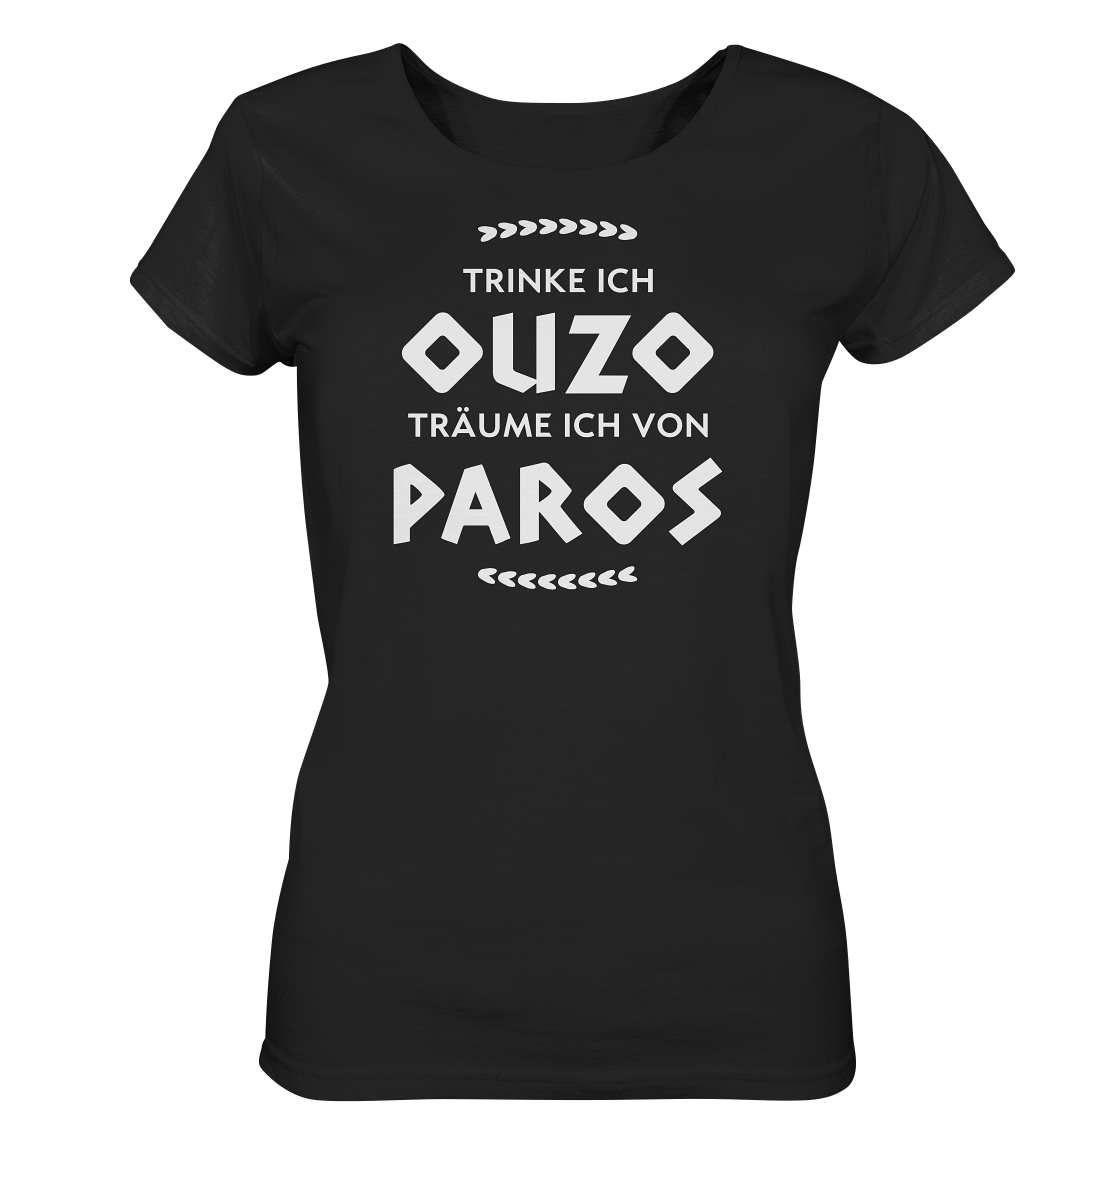 If I drink Ouzo I dream of Paros - Ladies Organic Shirt